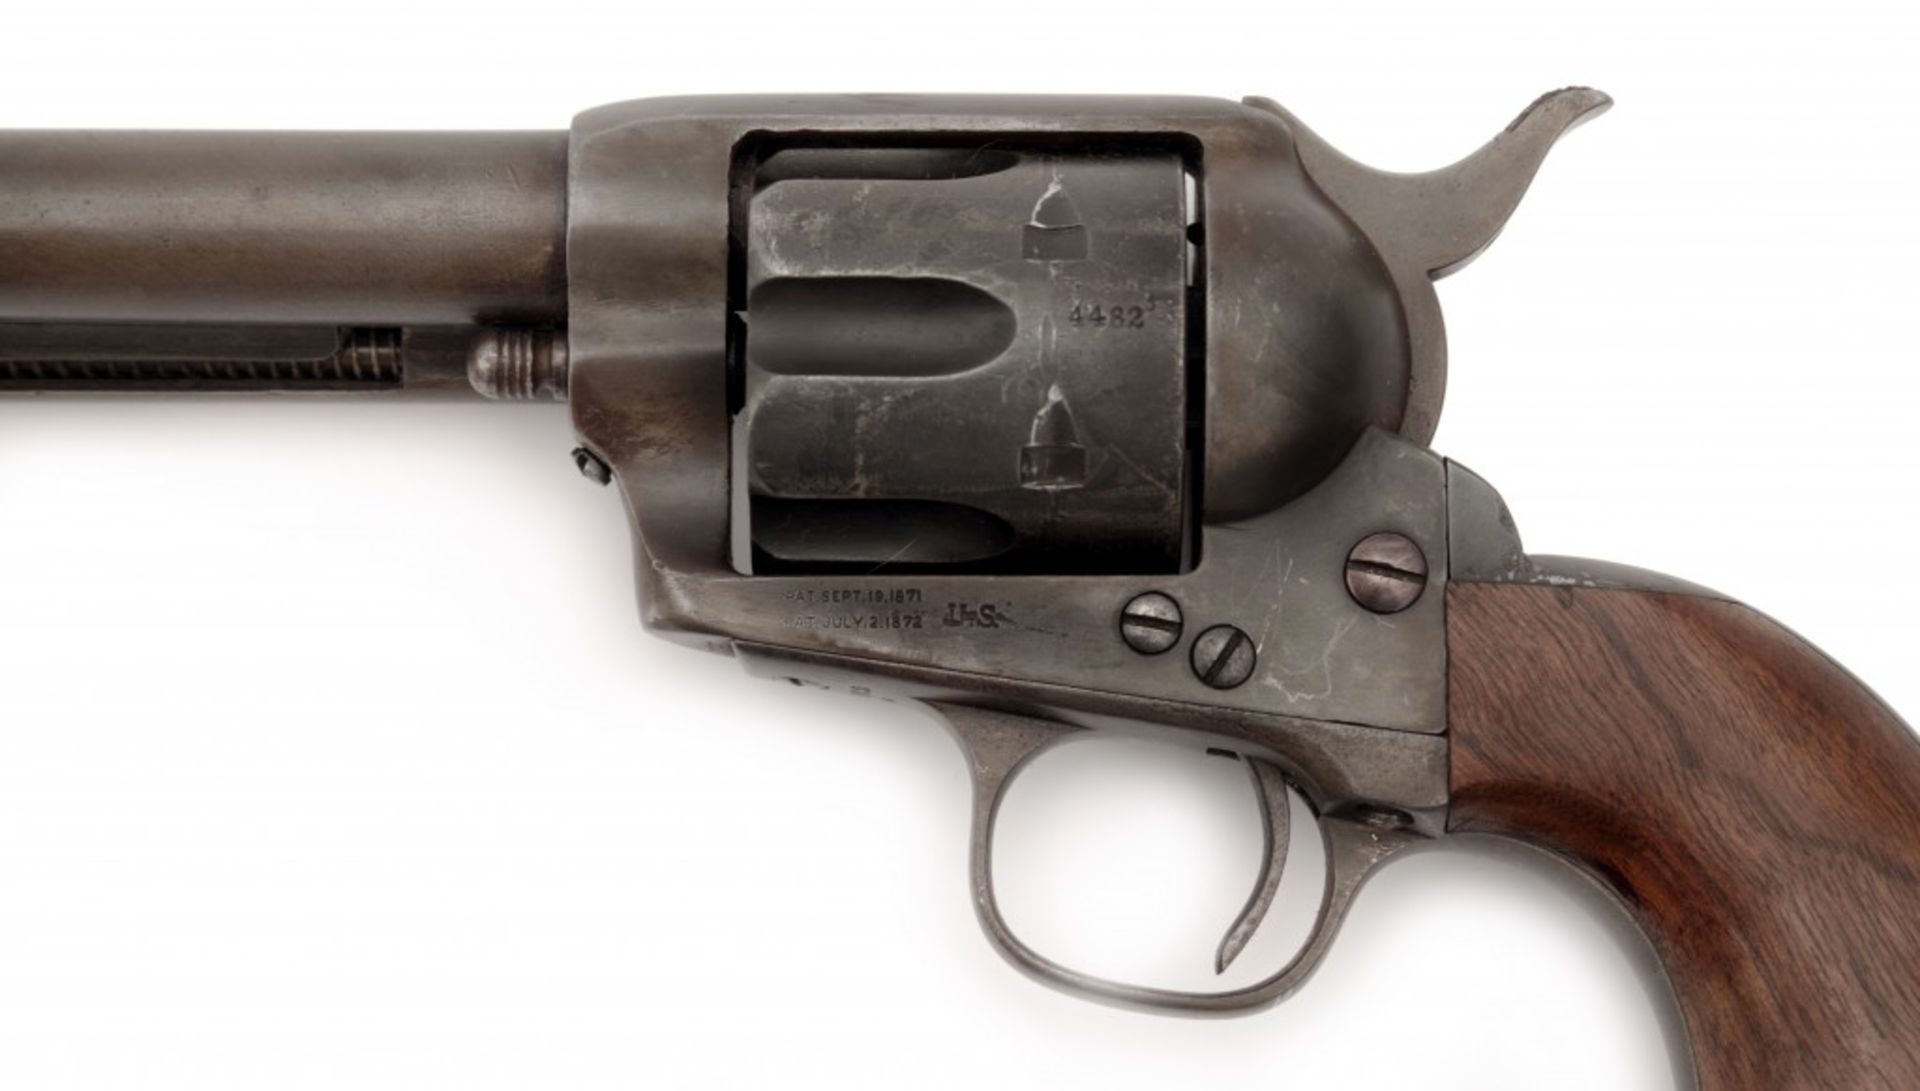 Colt SAA U.S. Artillery Model Revolver - Image 4 of 6